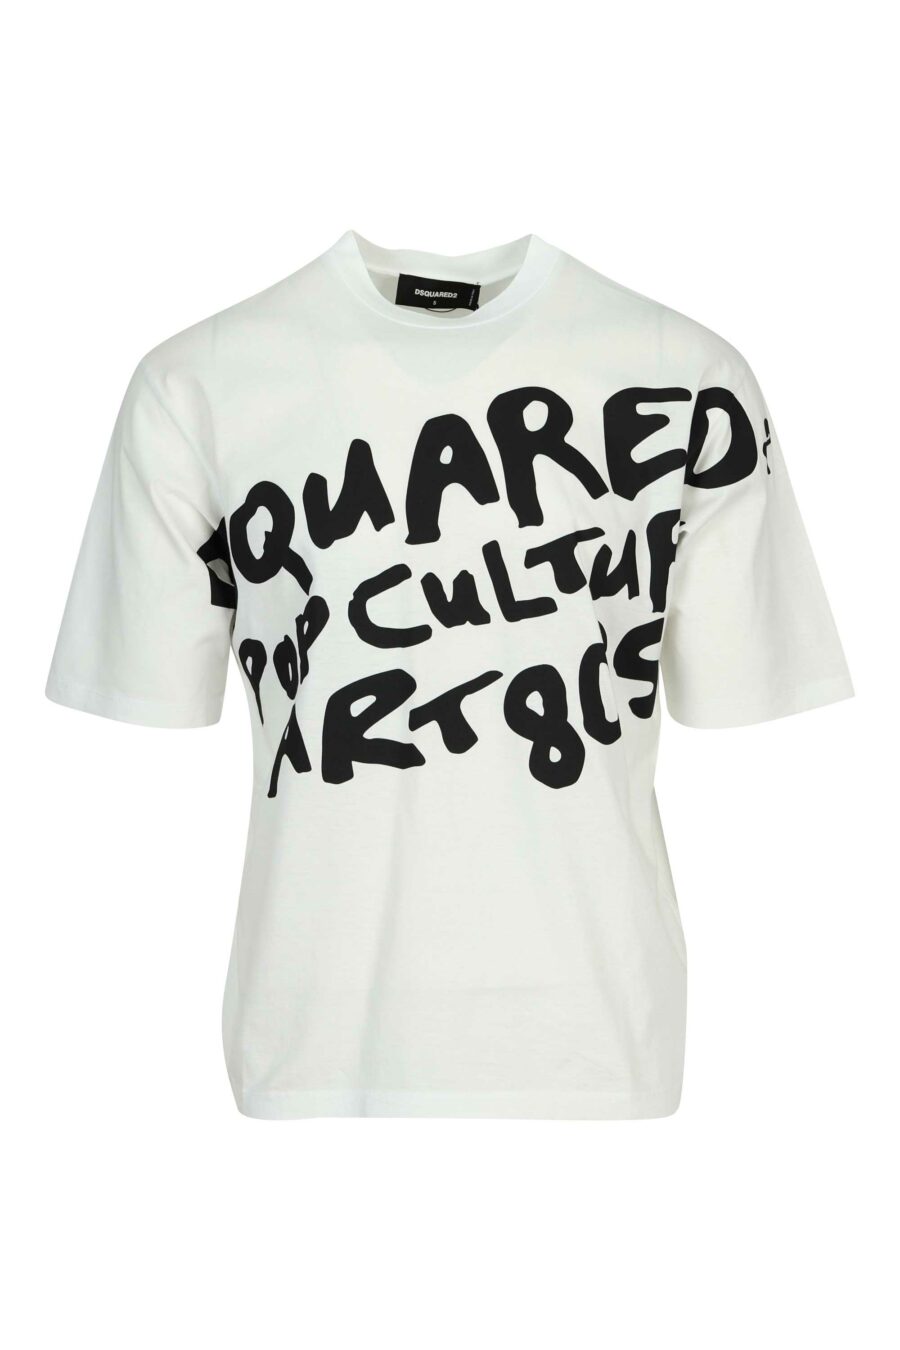 Camiseta blanca "oversize" con maxilogo "pop culture art 80's" - 8054148265694